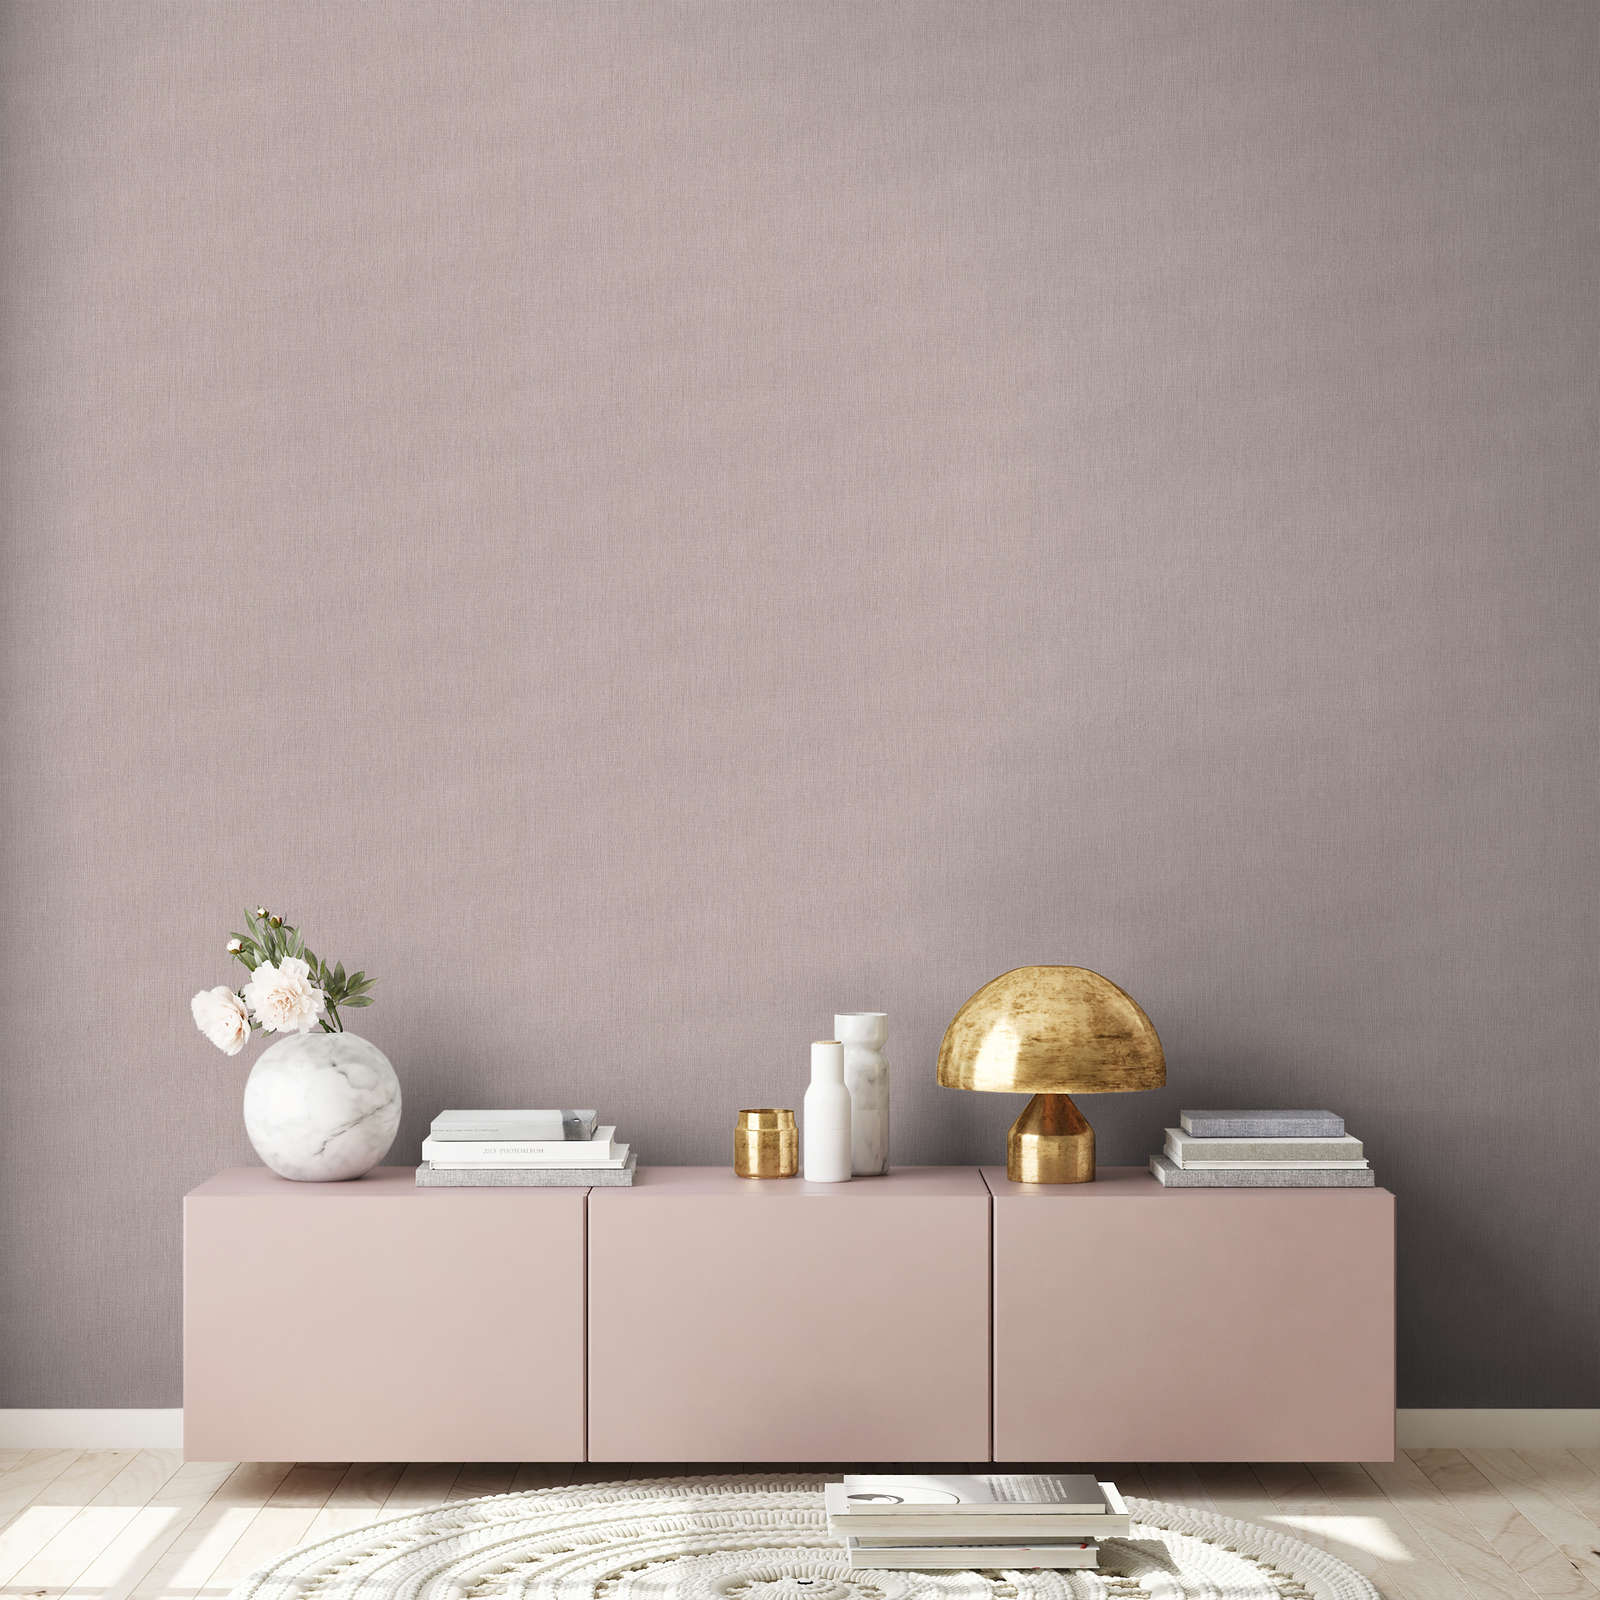             Single-coloured non-woven wallpaper with texture in matt look - brown
        